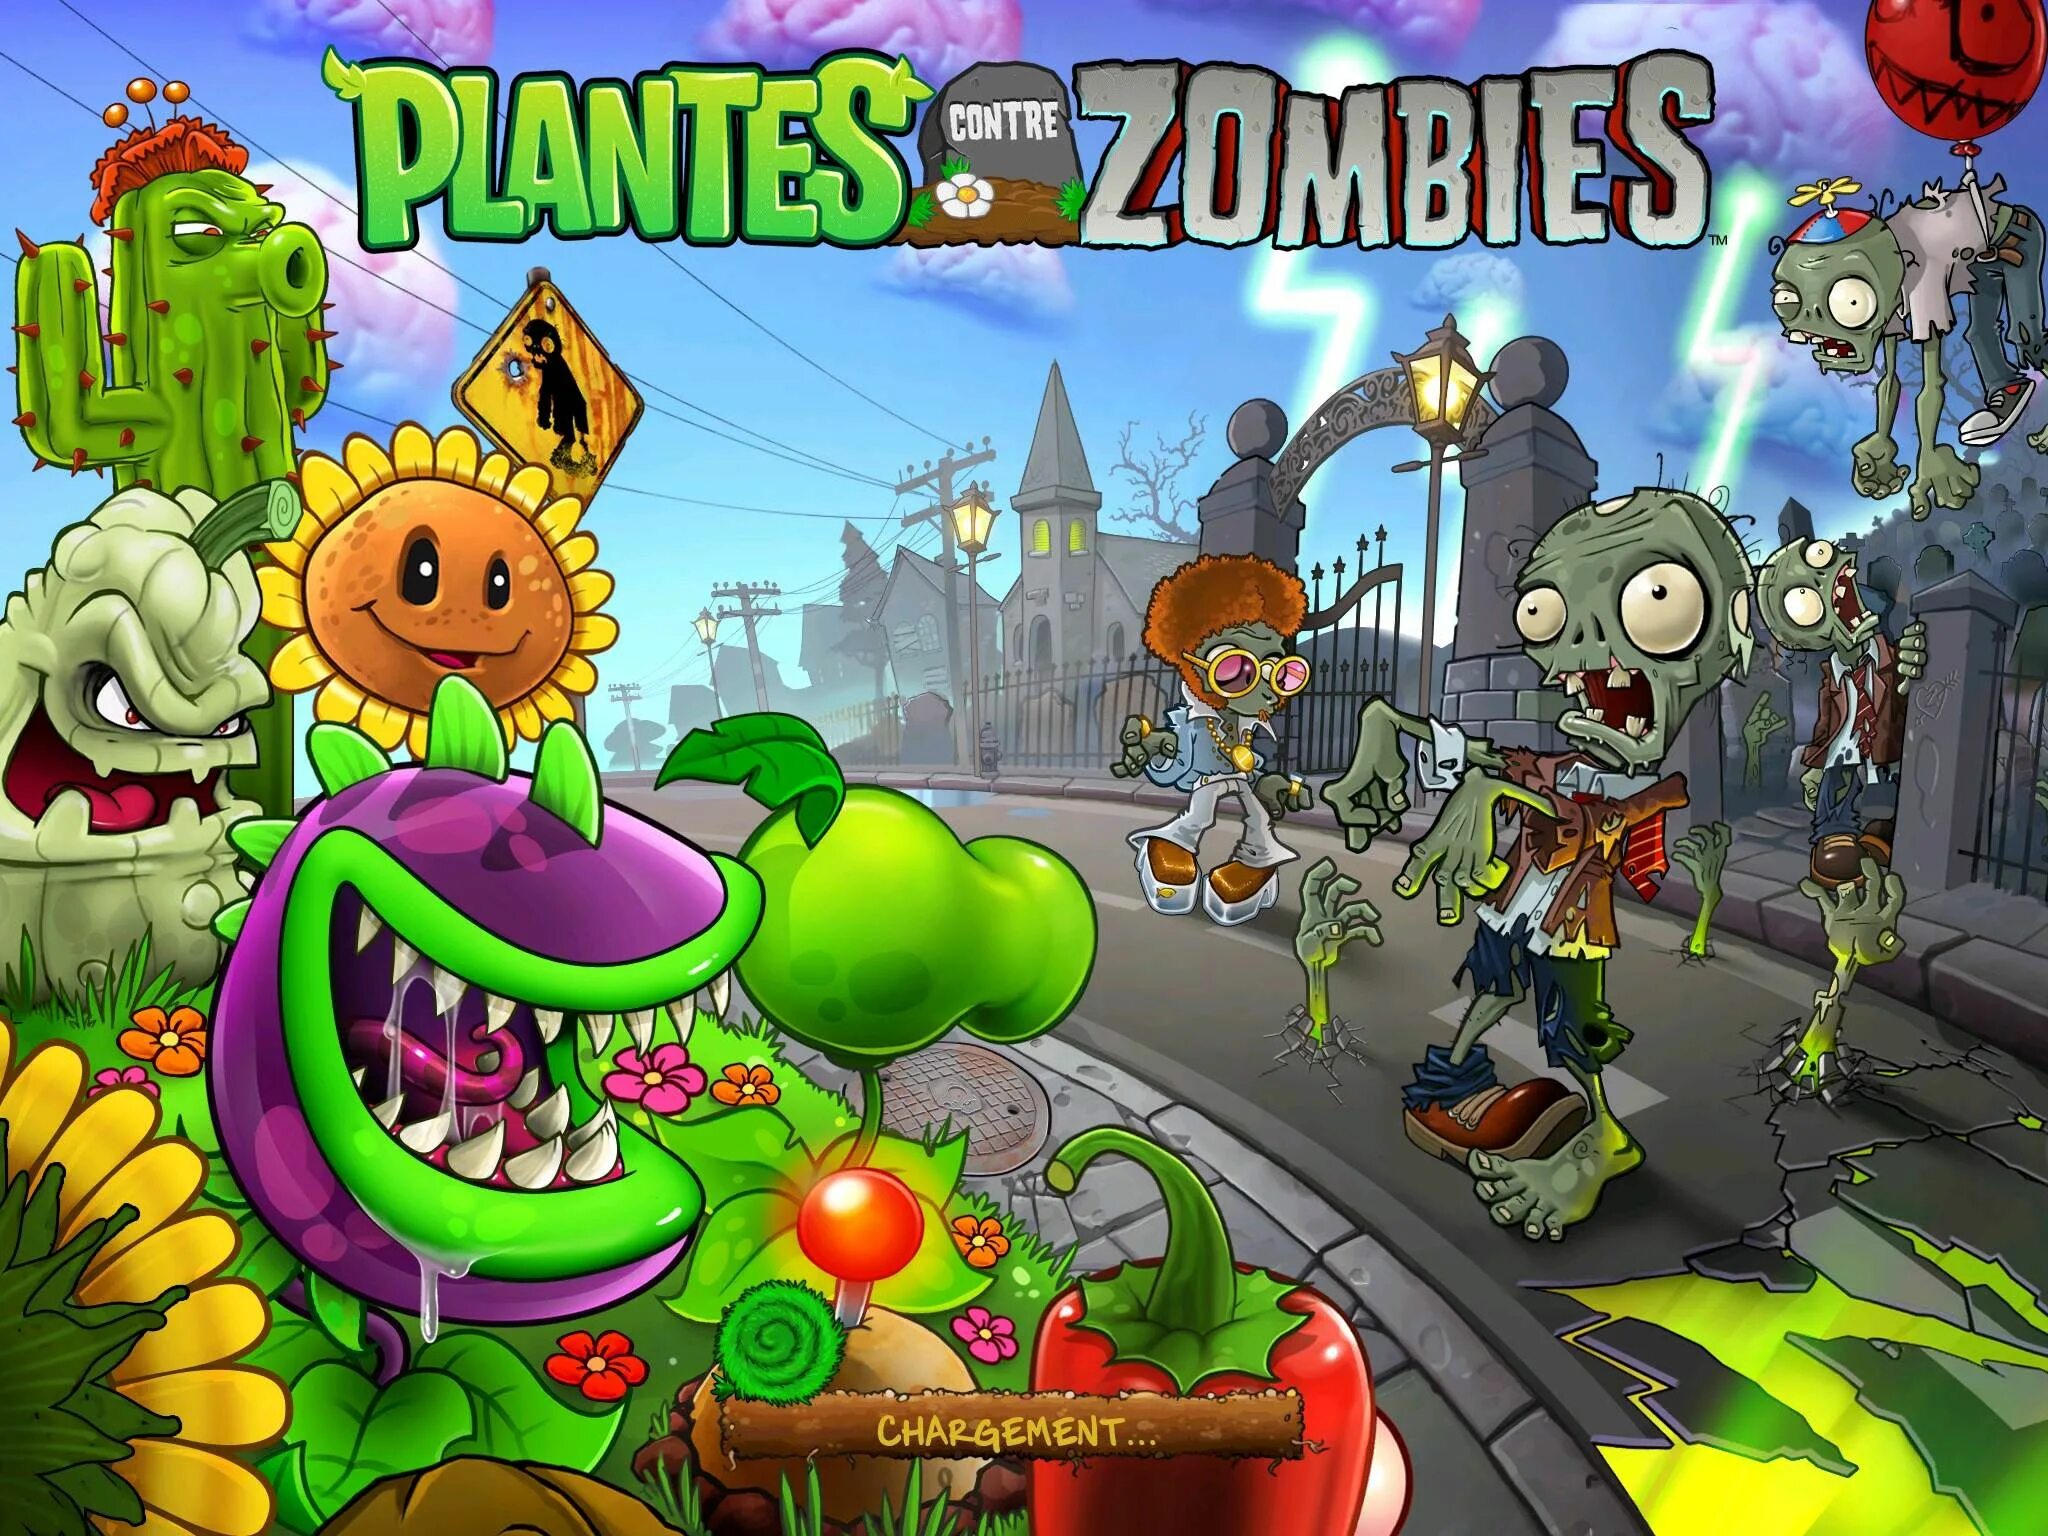 Игра двух цветов. Растения против зомби магазин безумного Дейва. Plants vs. Zombies игры. Дом безумного Дейва растения против зомби. Игра плантация зомби.